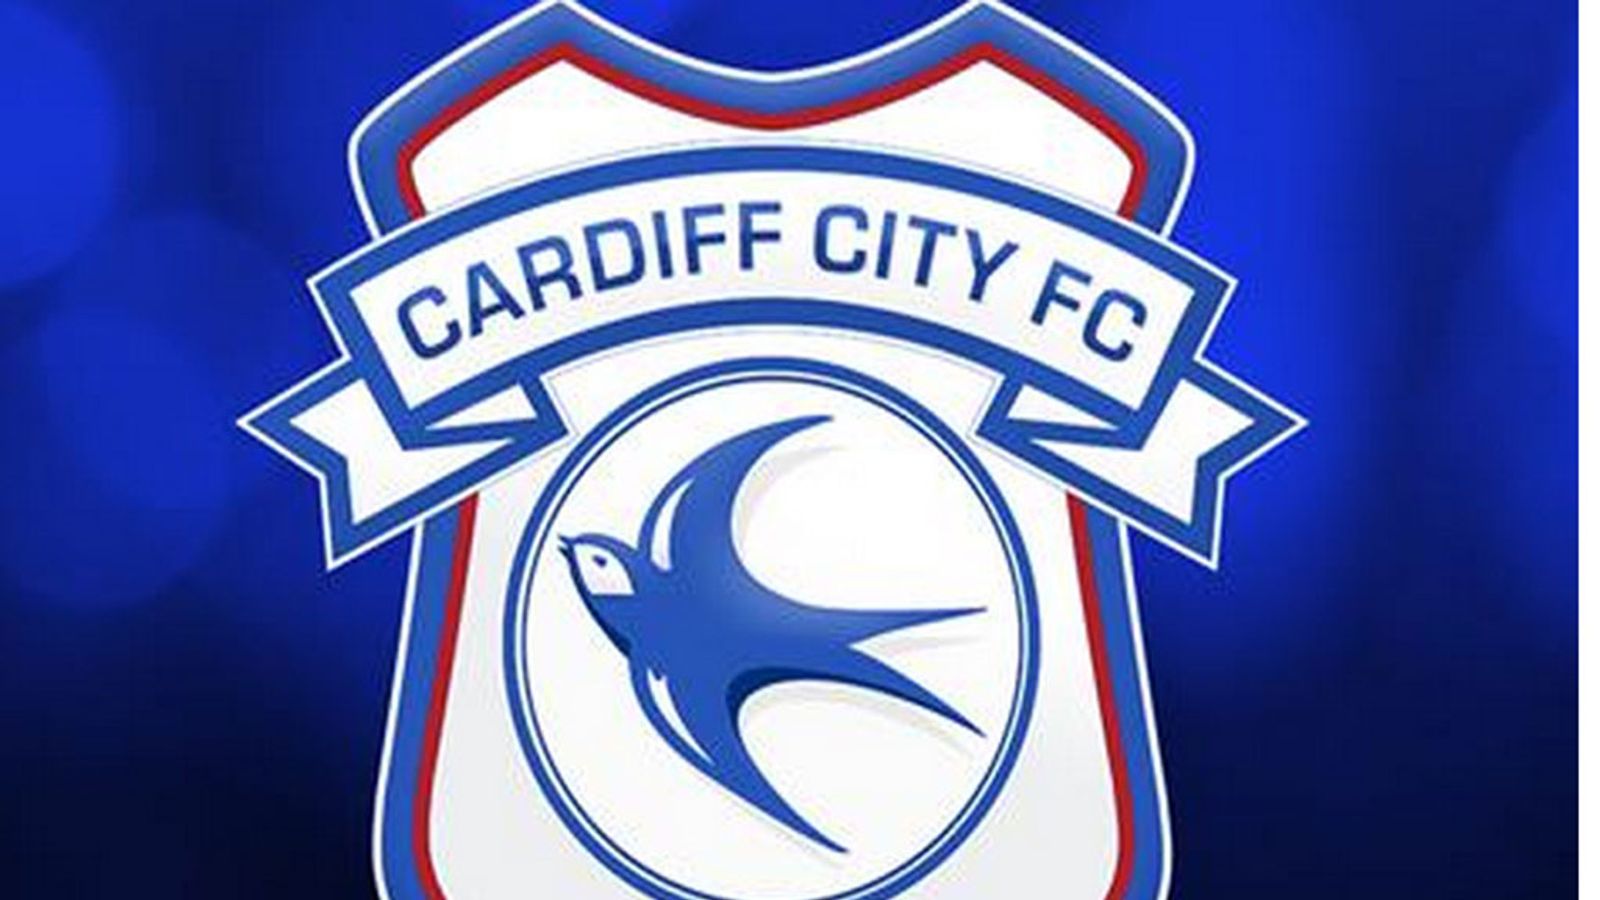 Cardiff City FC Students